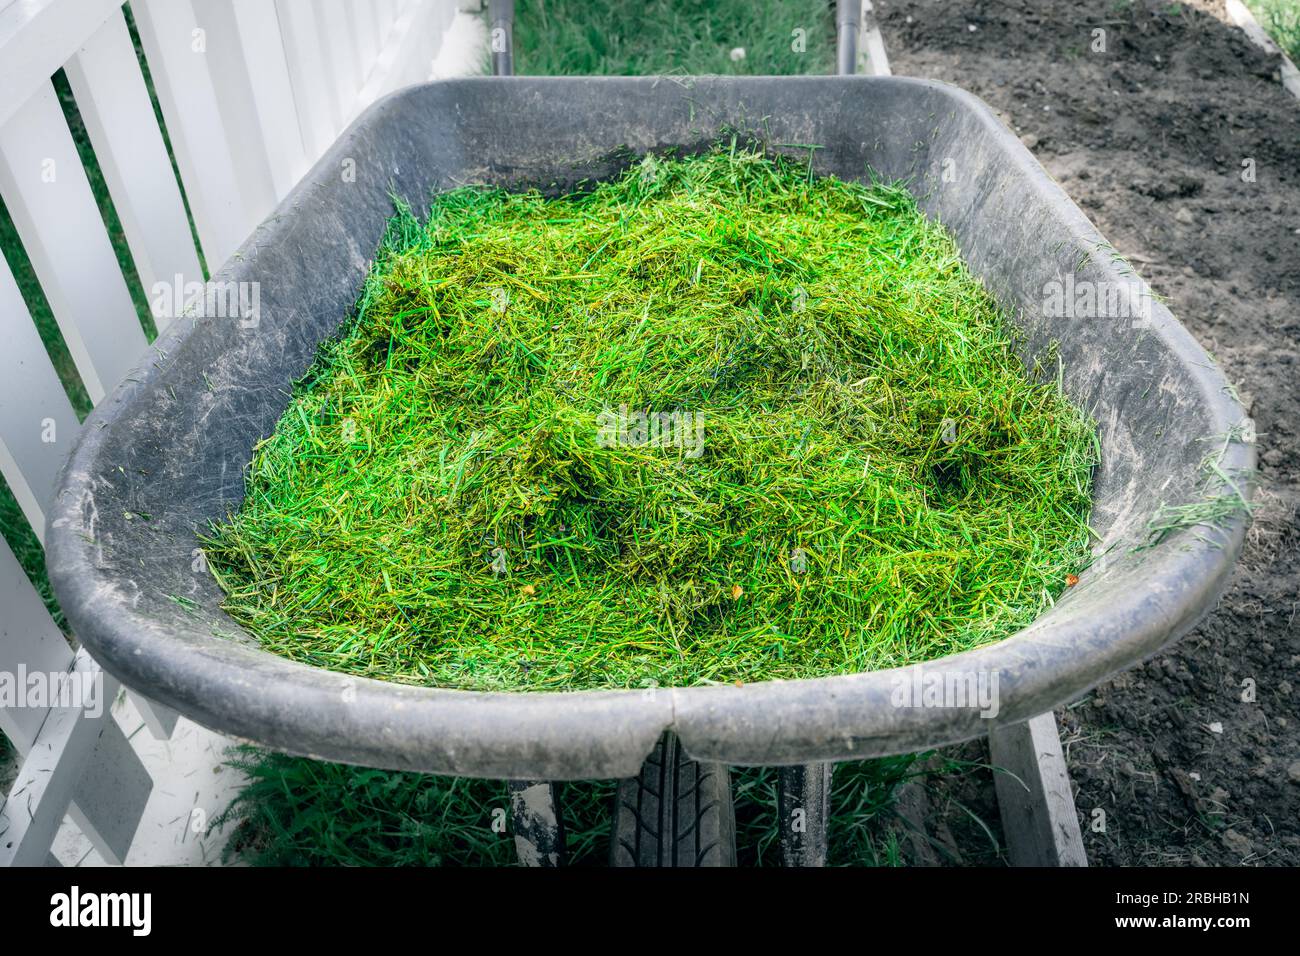 Freshly cut green grass from the lawn in a garden wheelbarrow close-up. Using cut grass to mulch garden beds Stock Photo